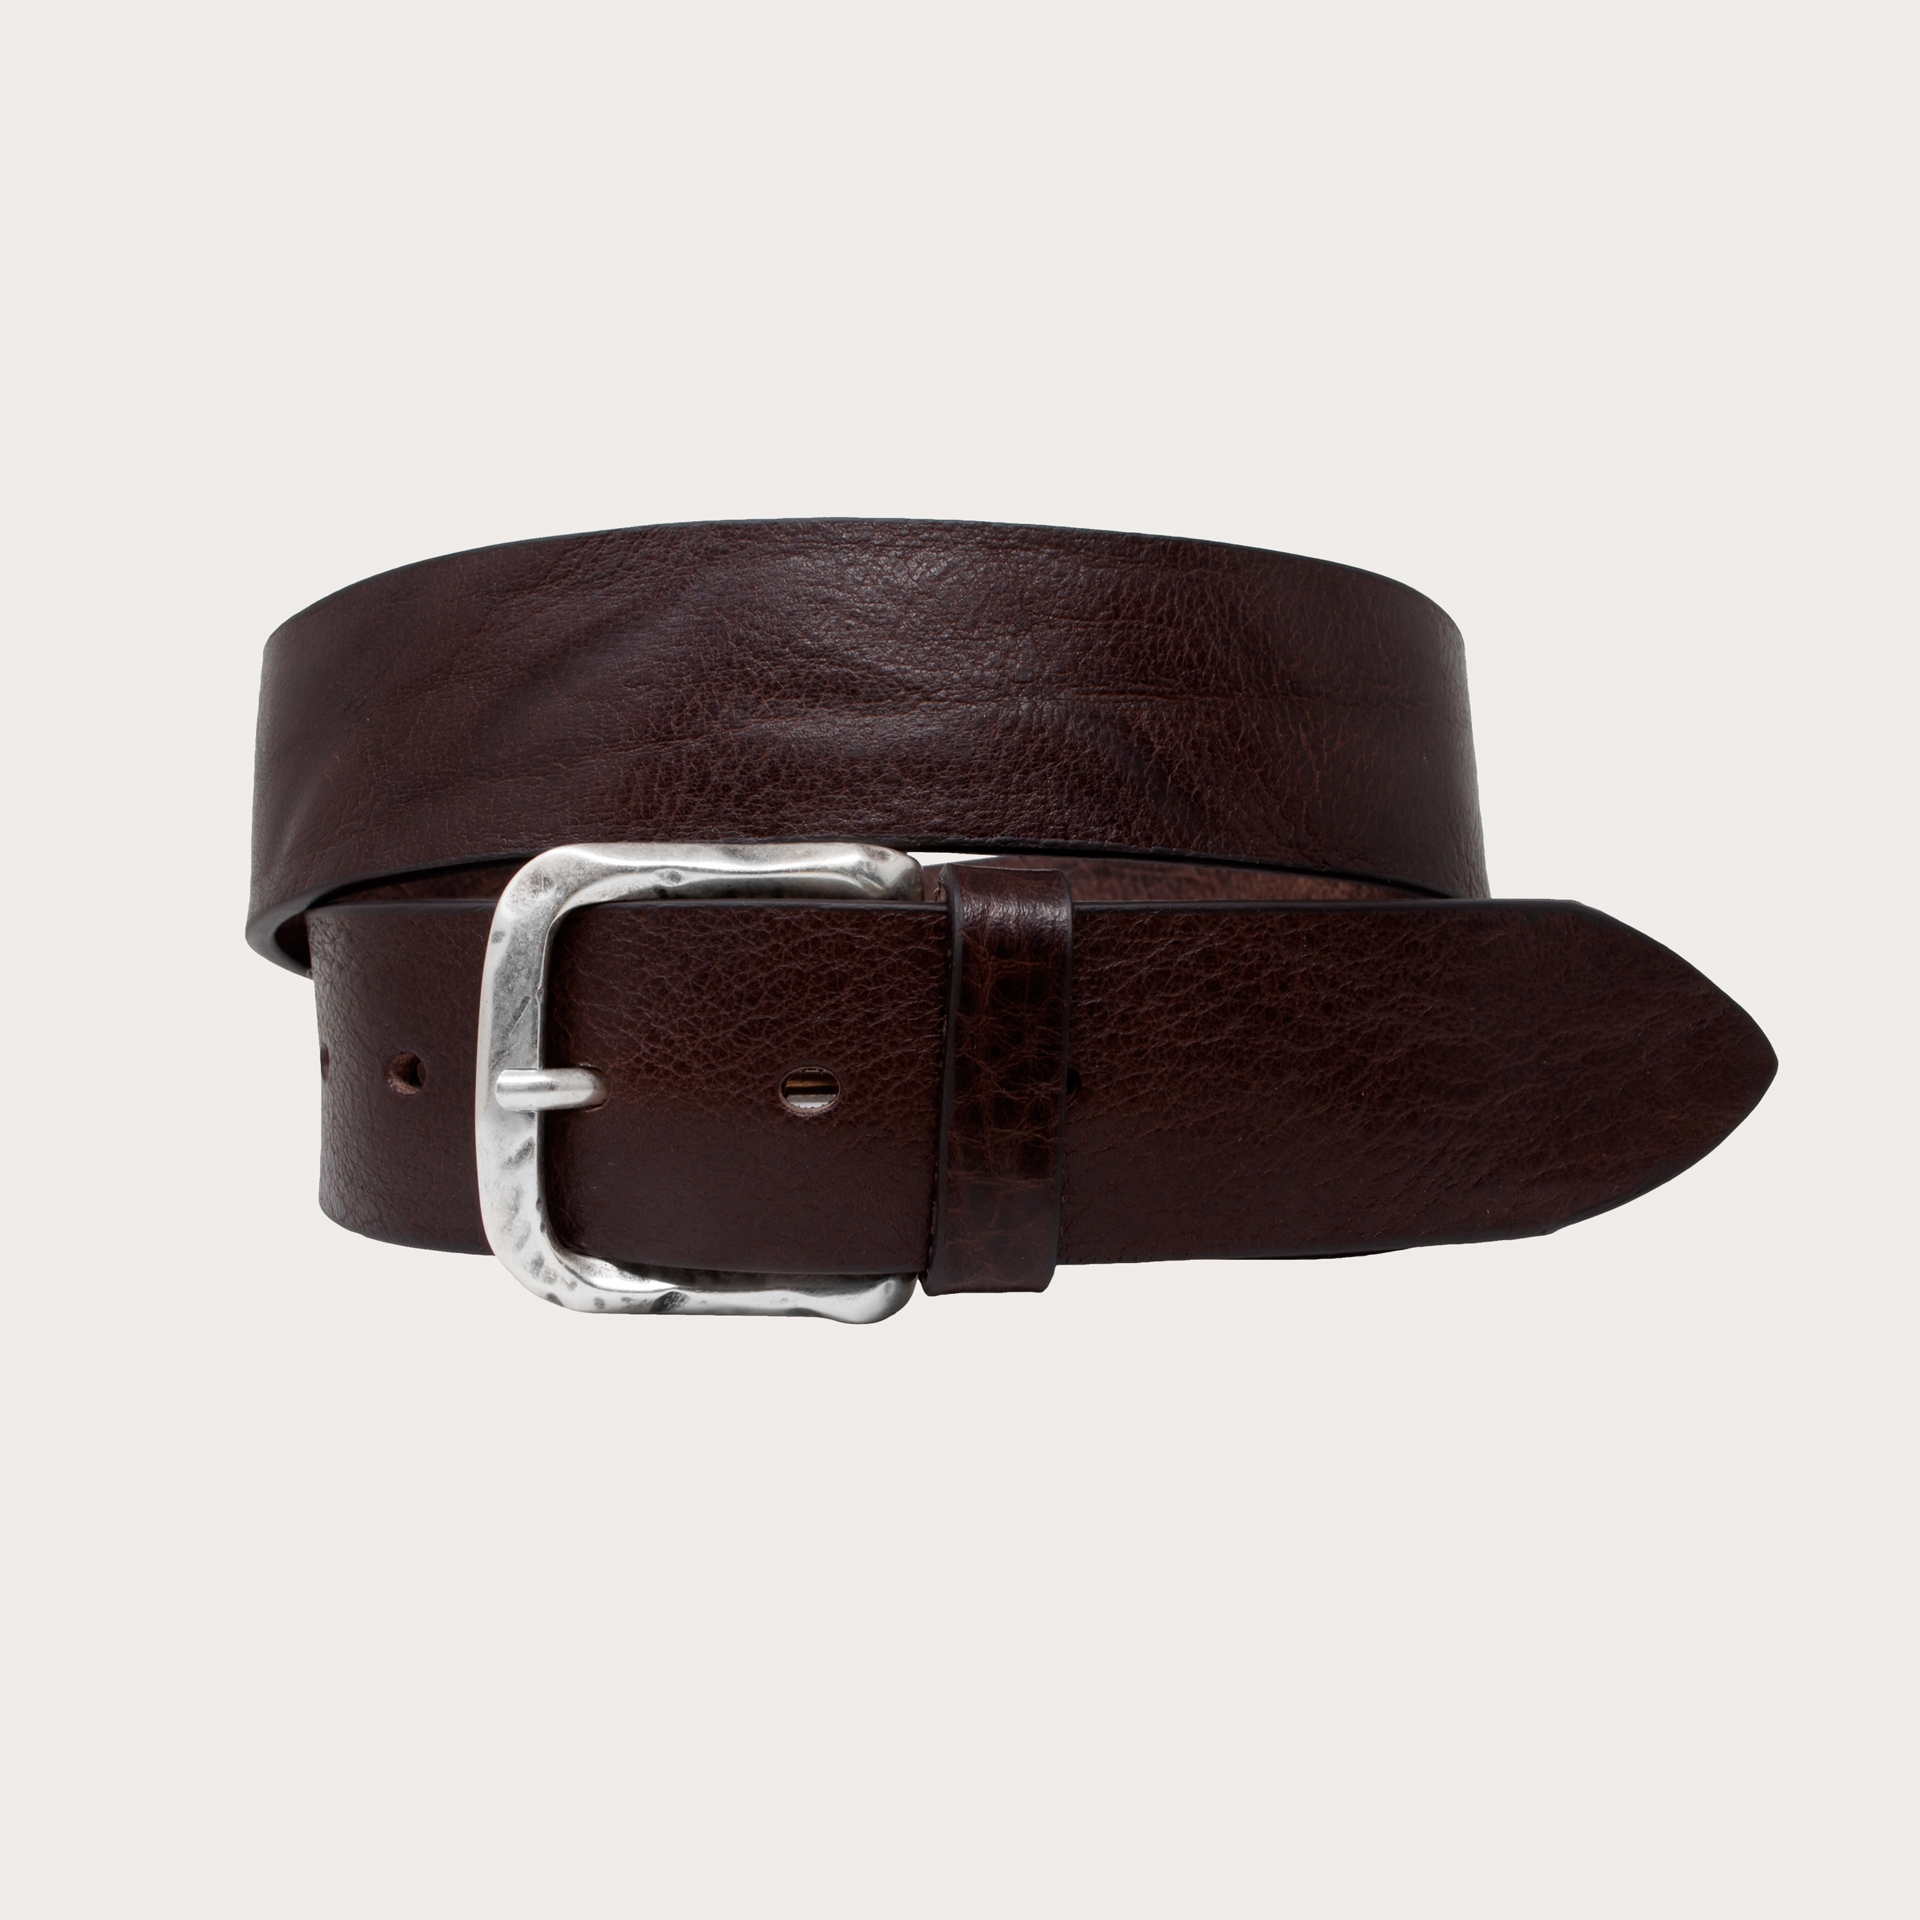 BRUCLE Casual belt in raw-cut bull leather, dark brown